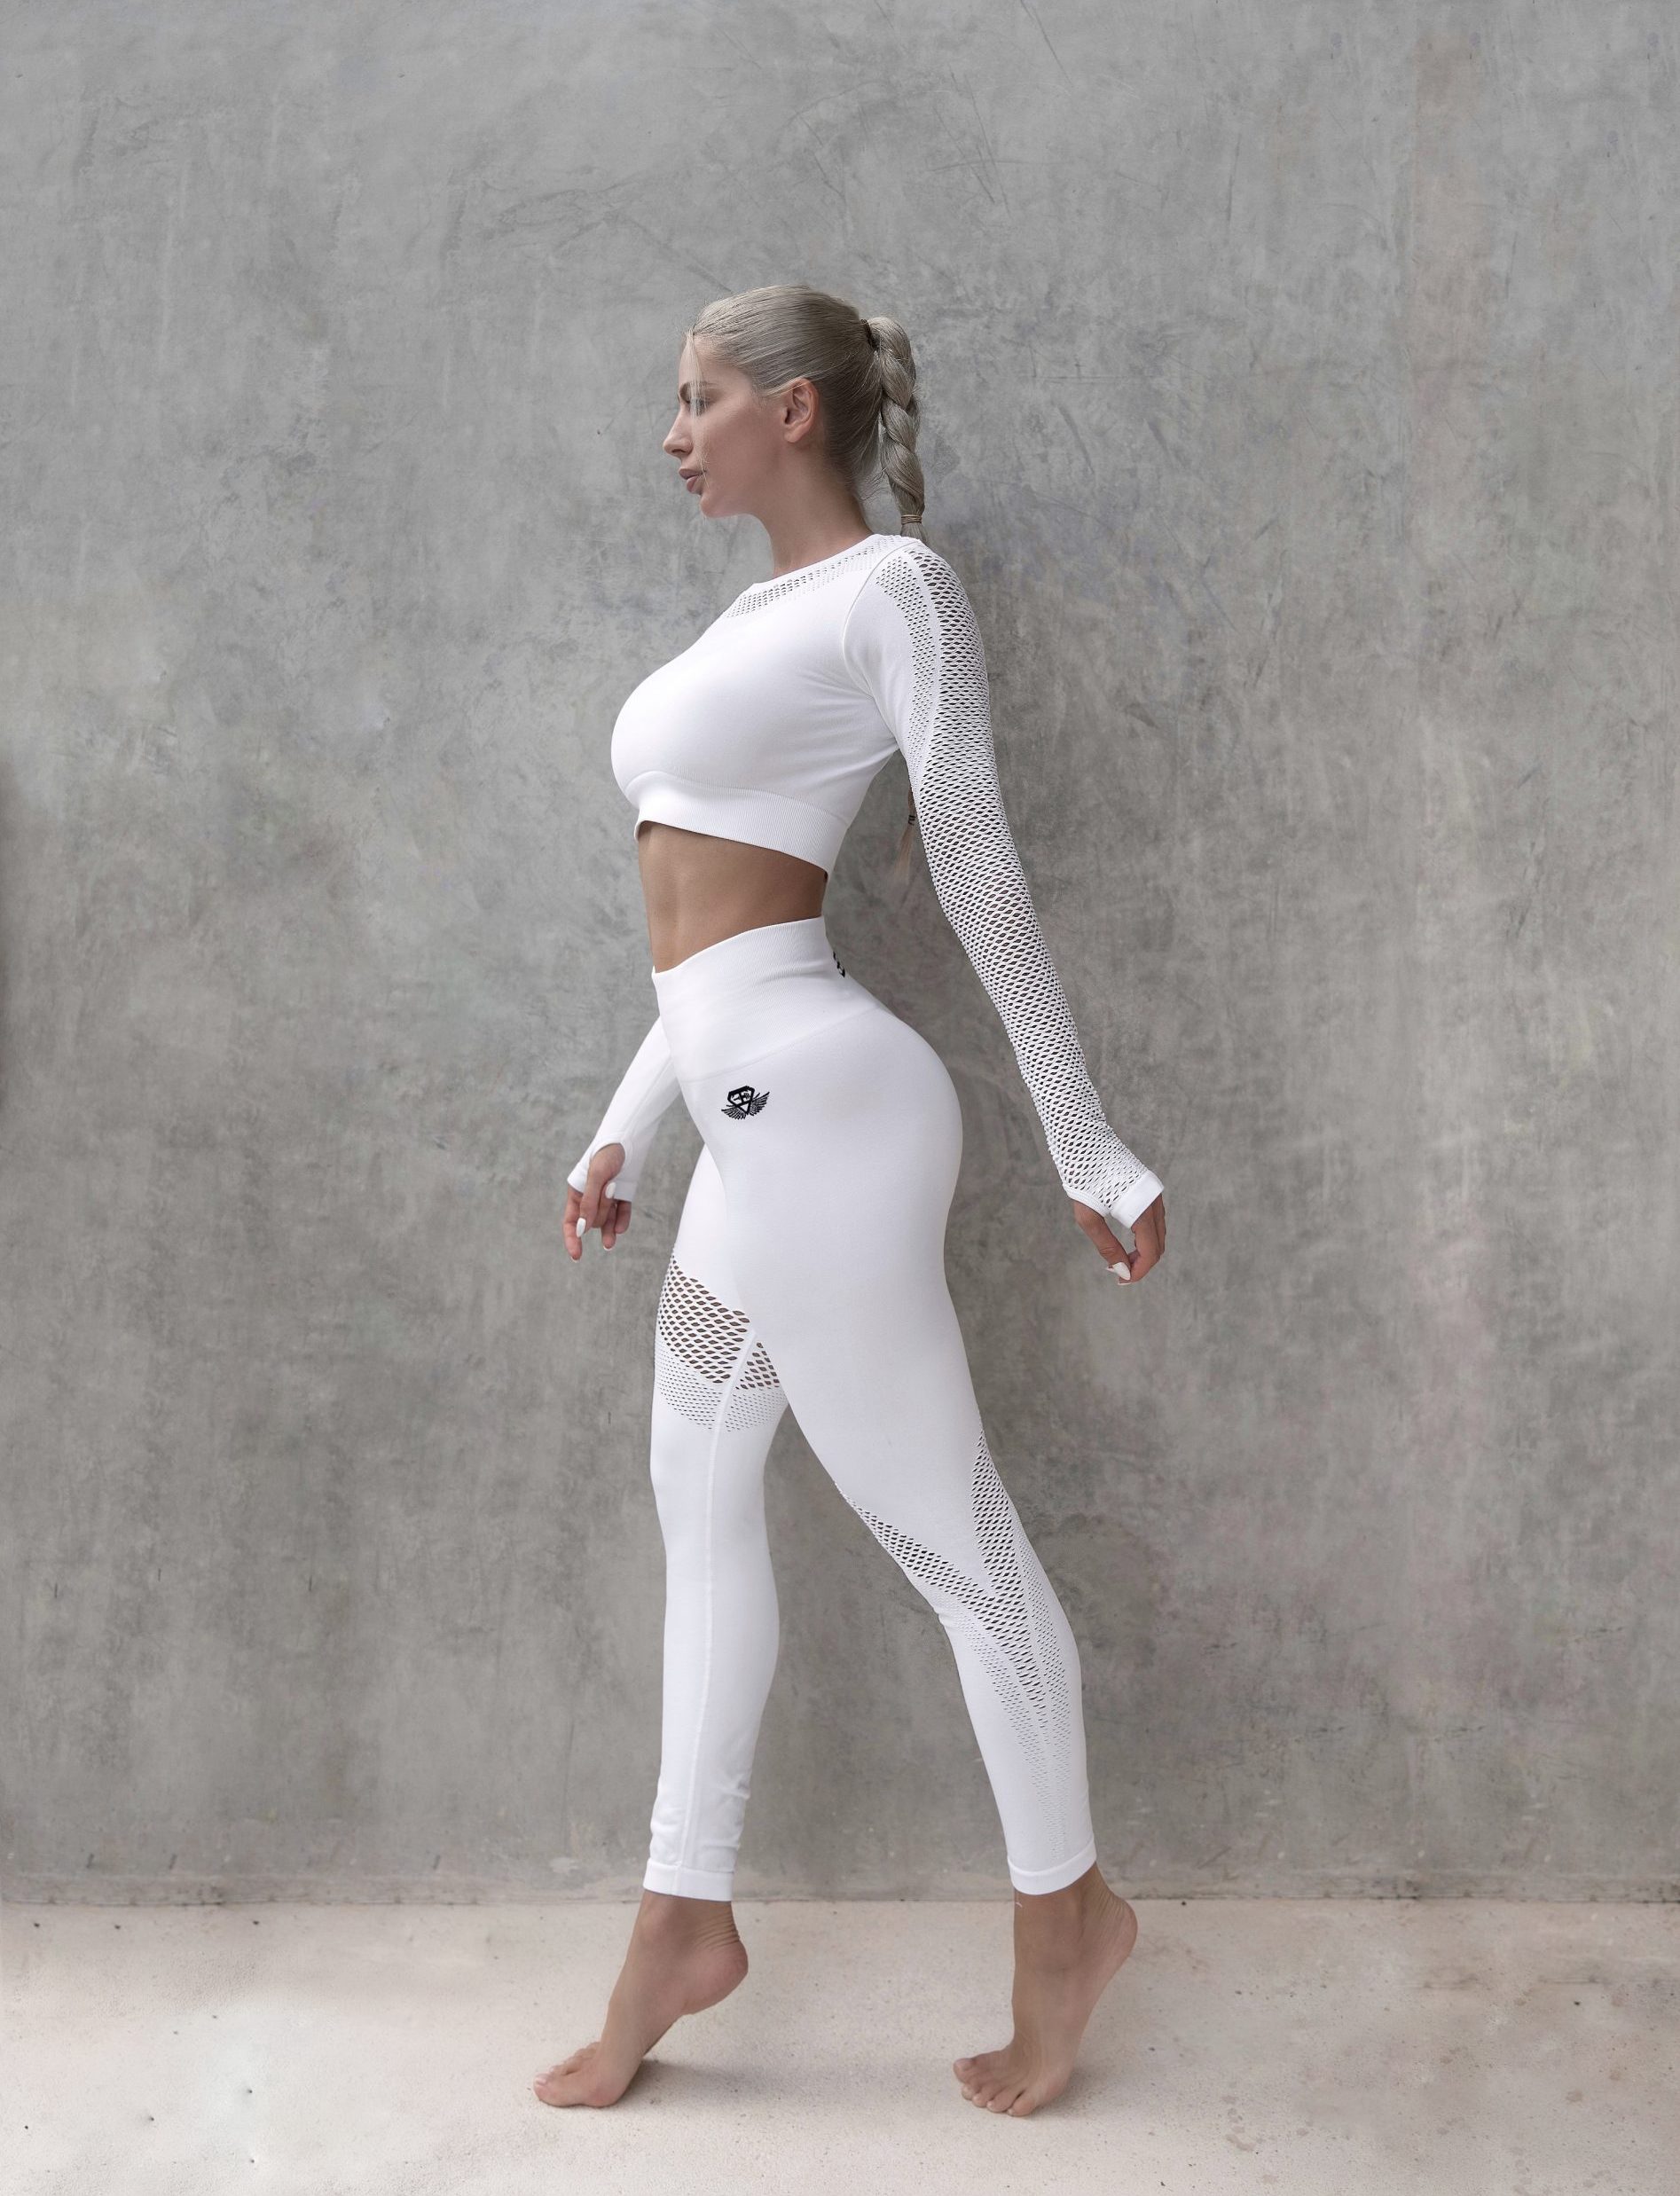 Republic of curves | Black Net White Yoga Pant | Yoga Pants | Gym Leggings |